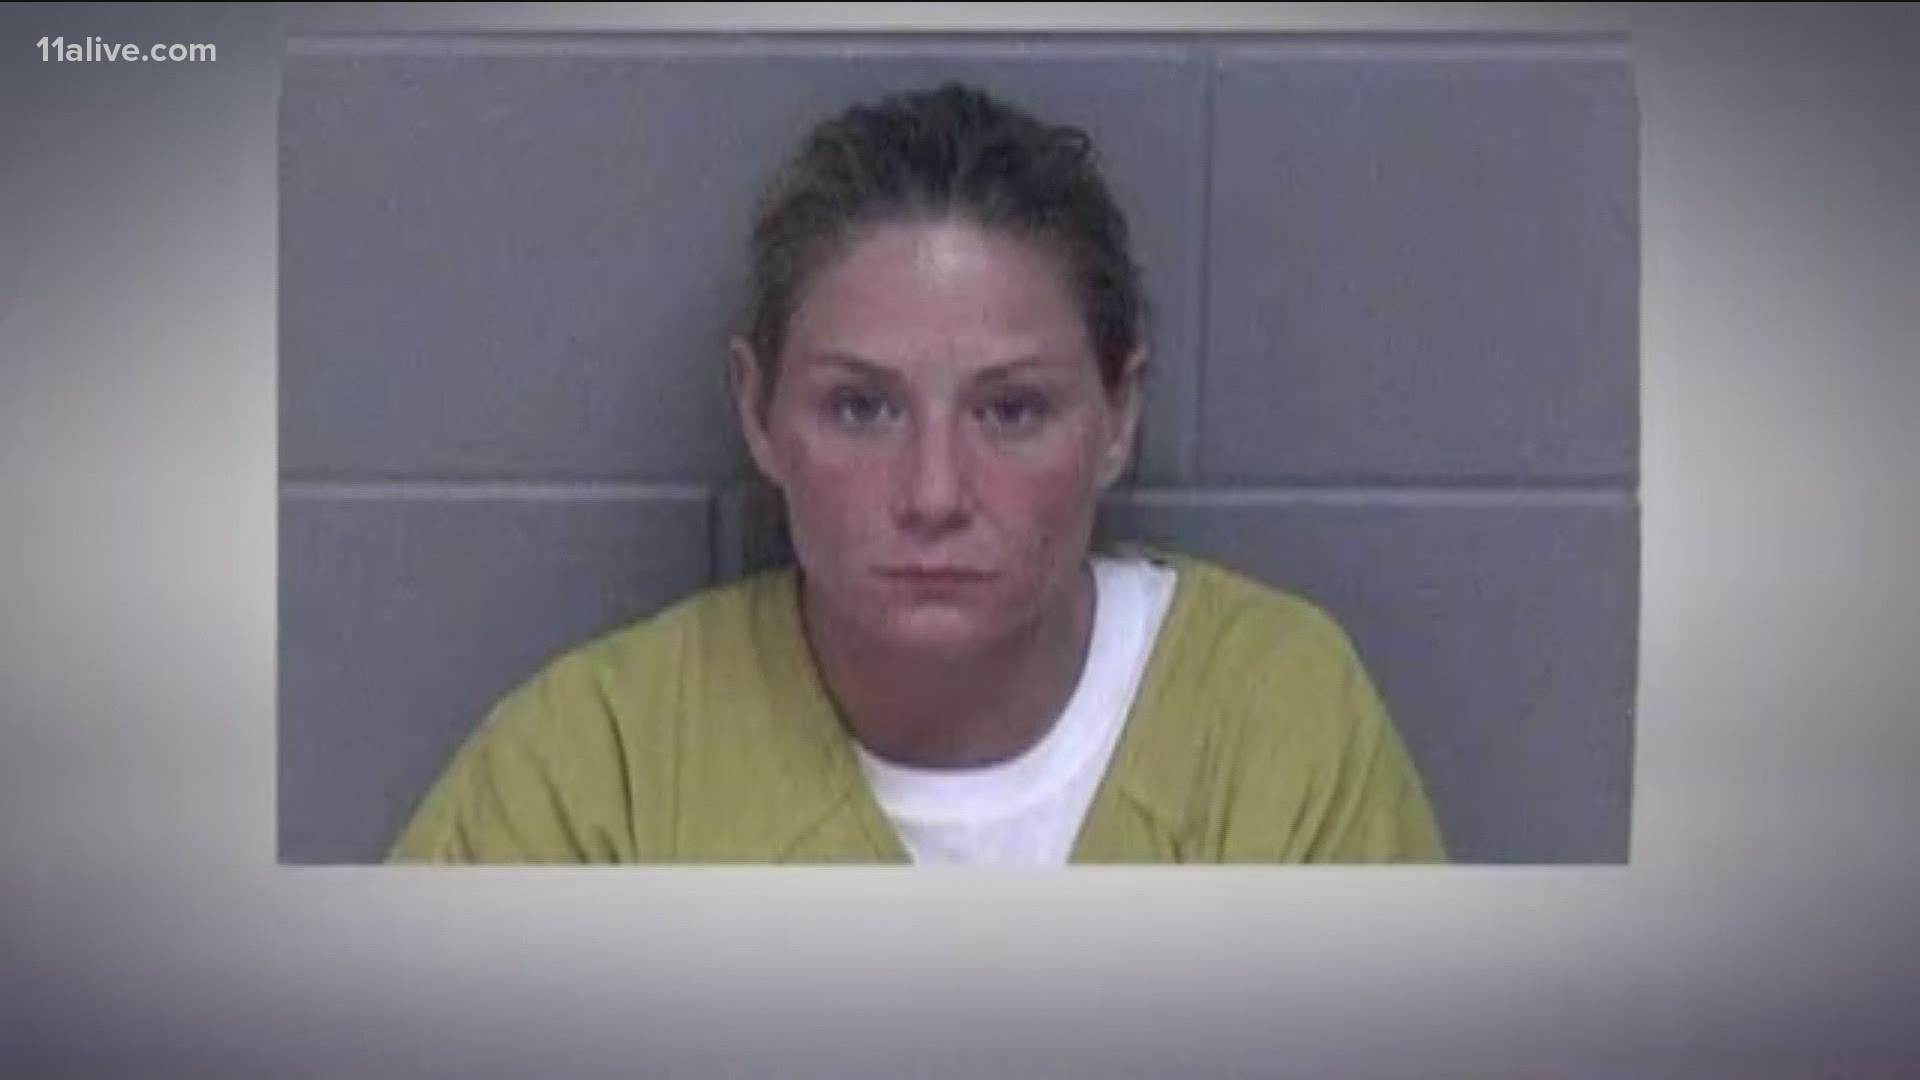 Sheriff Robert Markley said 36-year-old Alison Jones has been arrested.